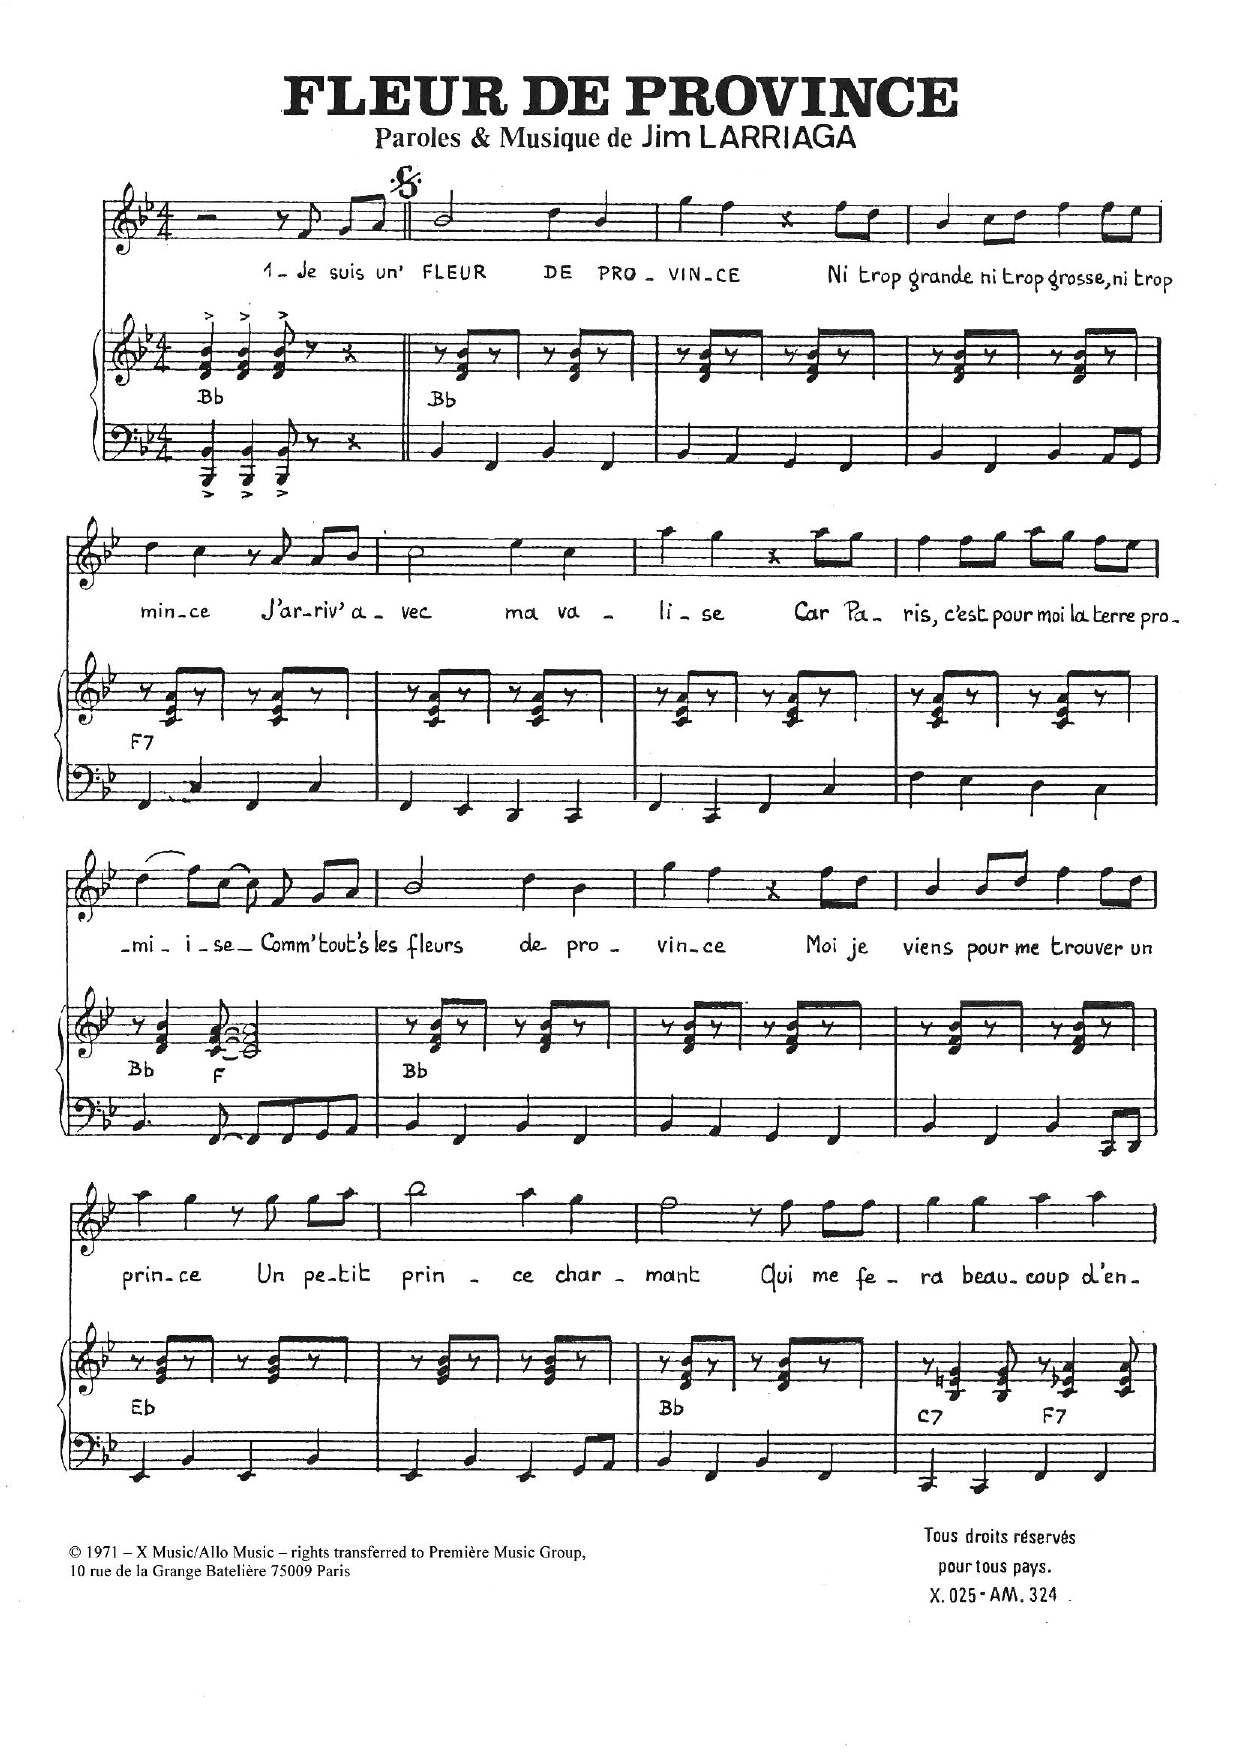 Charlotte Julian Fleur de Province Sheet Music Notes & Chords for Piano & Vocal - Download or Print PDF